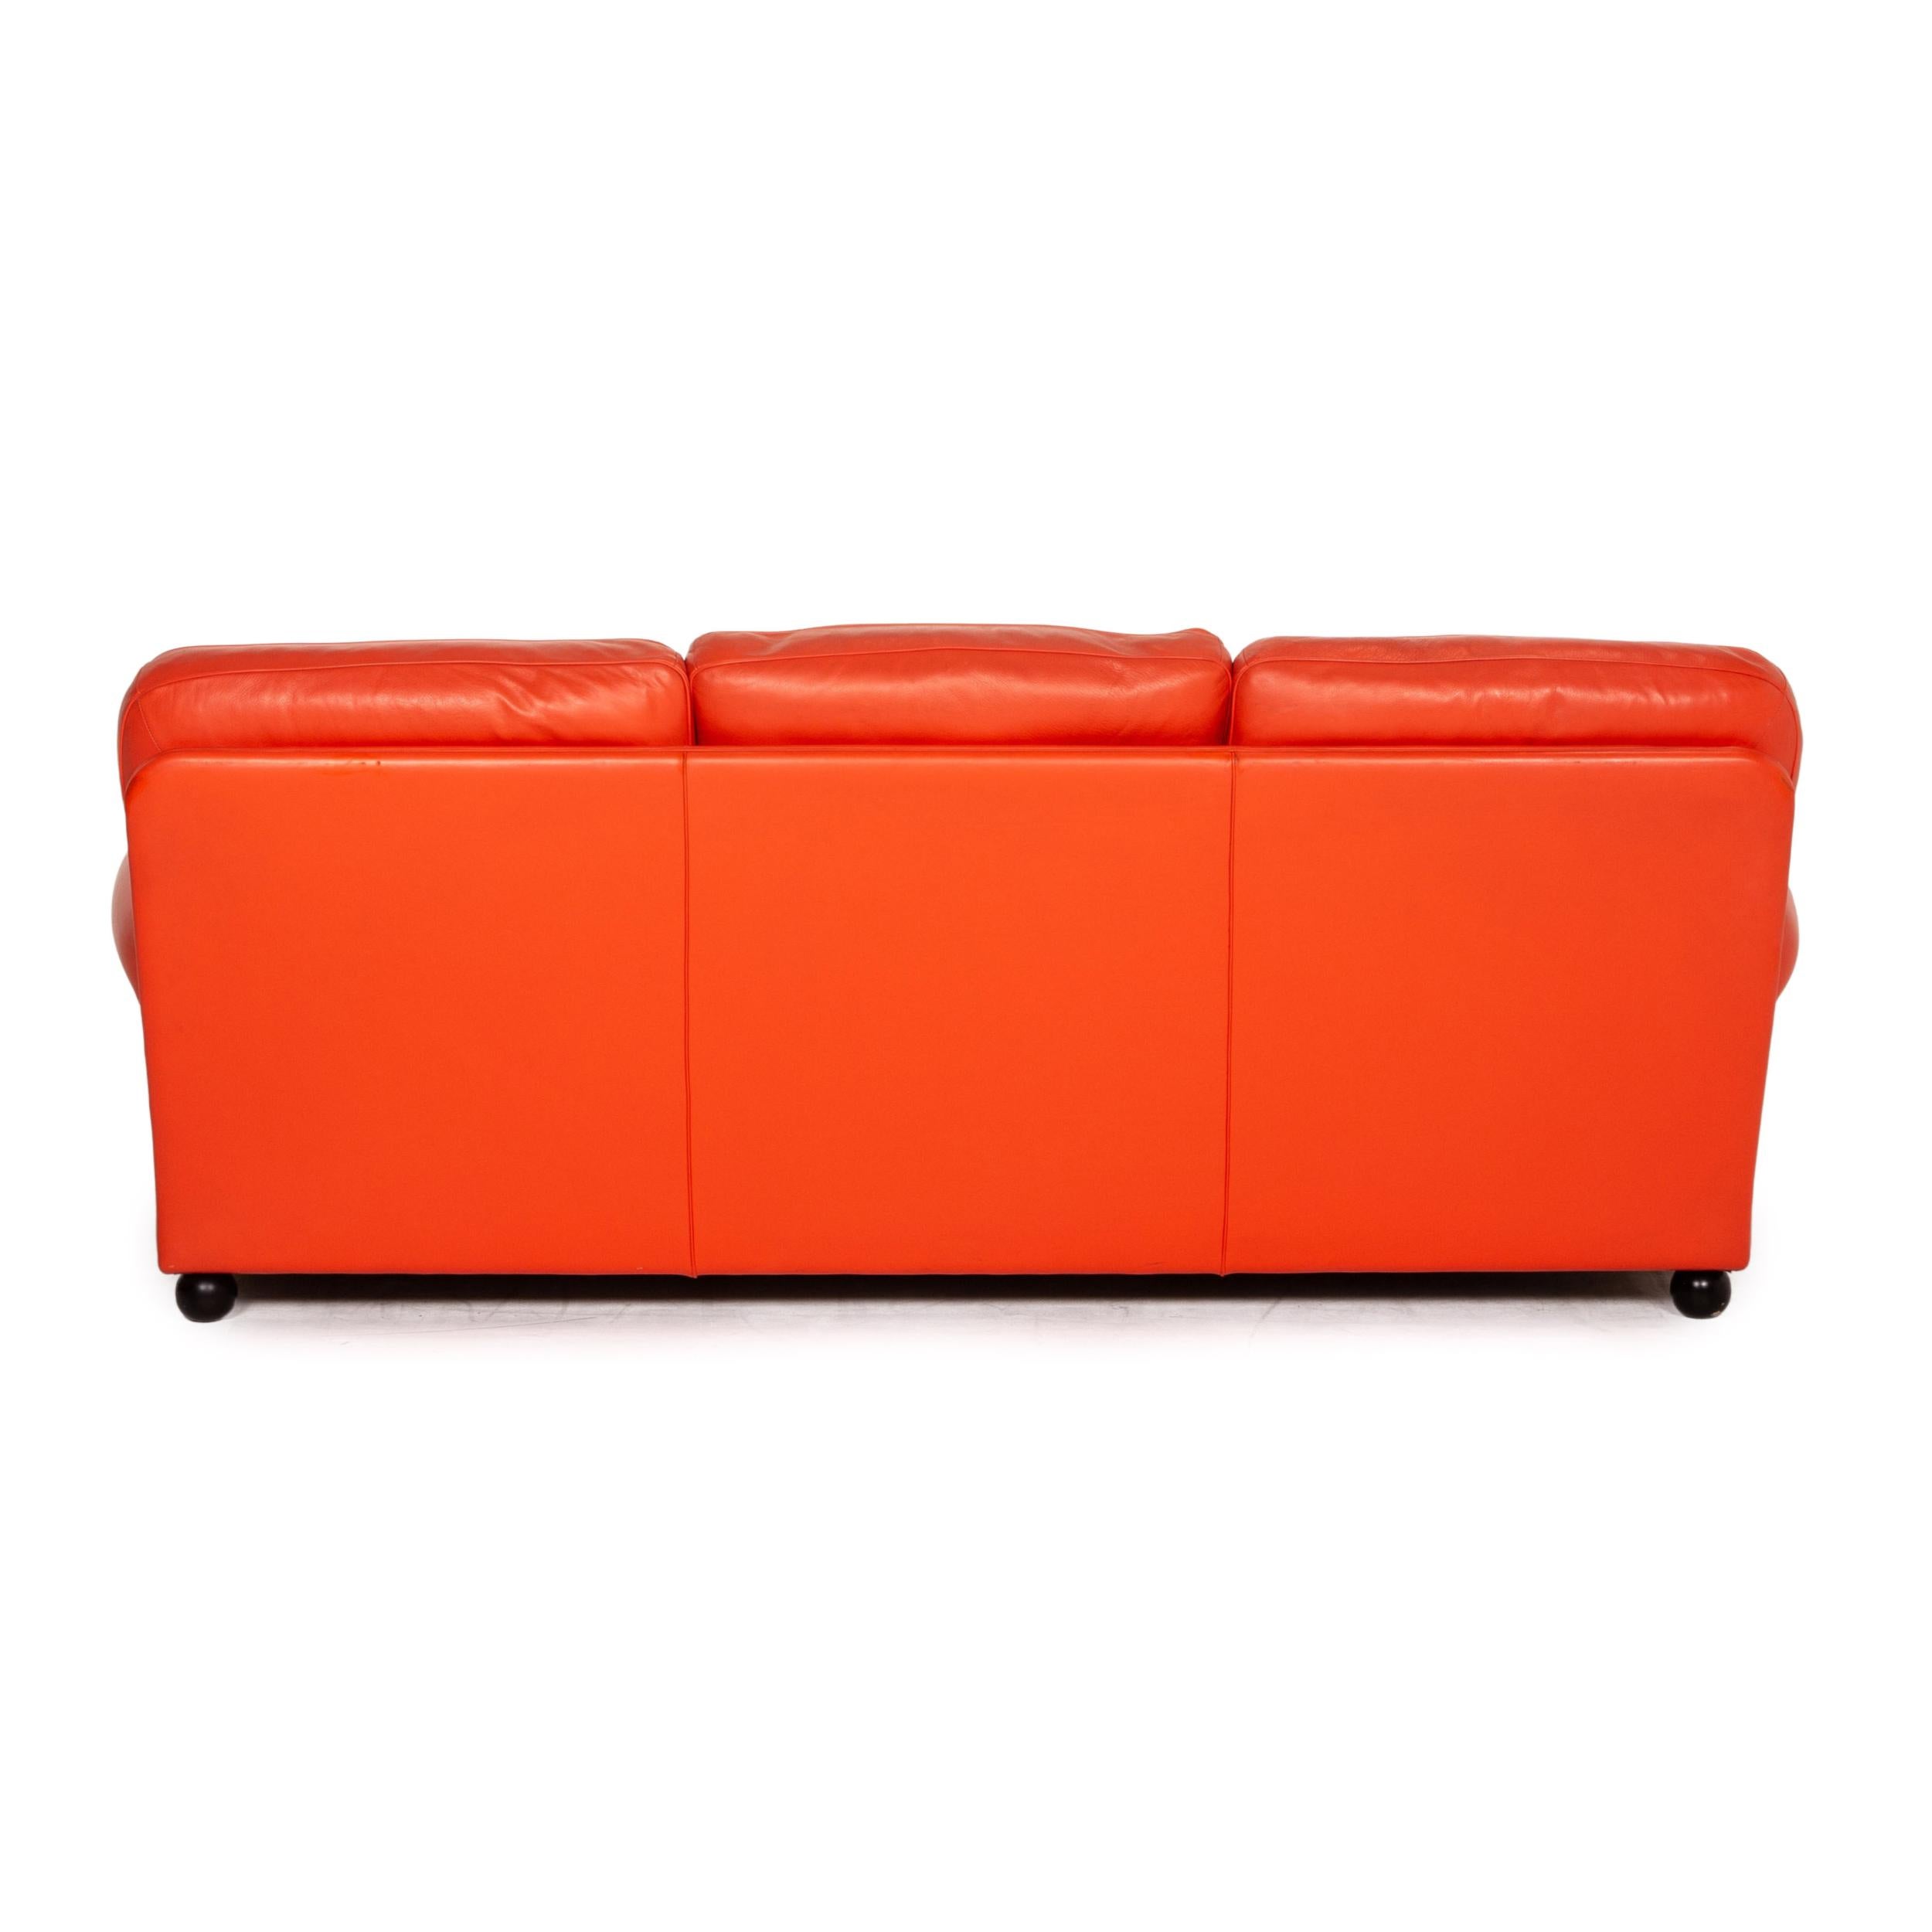 Poltrona Frau Dream on Leather Sofa Coral Orange Chesterfield Sofa Couch 4